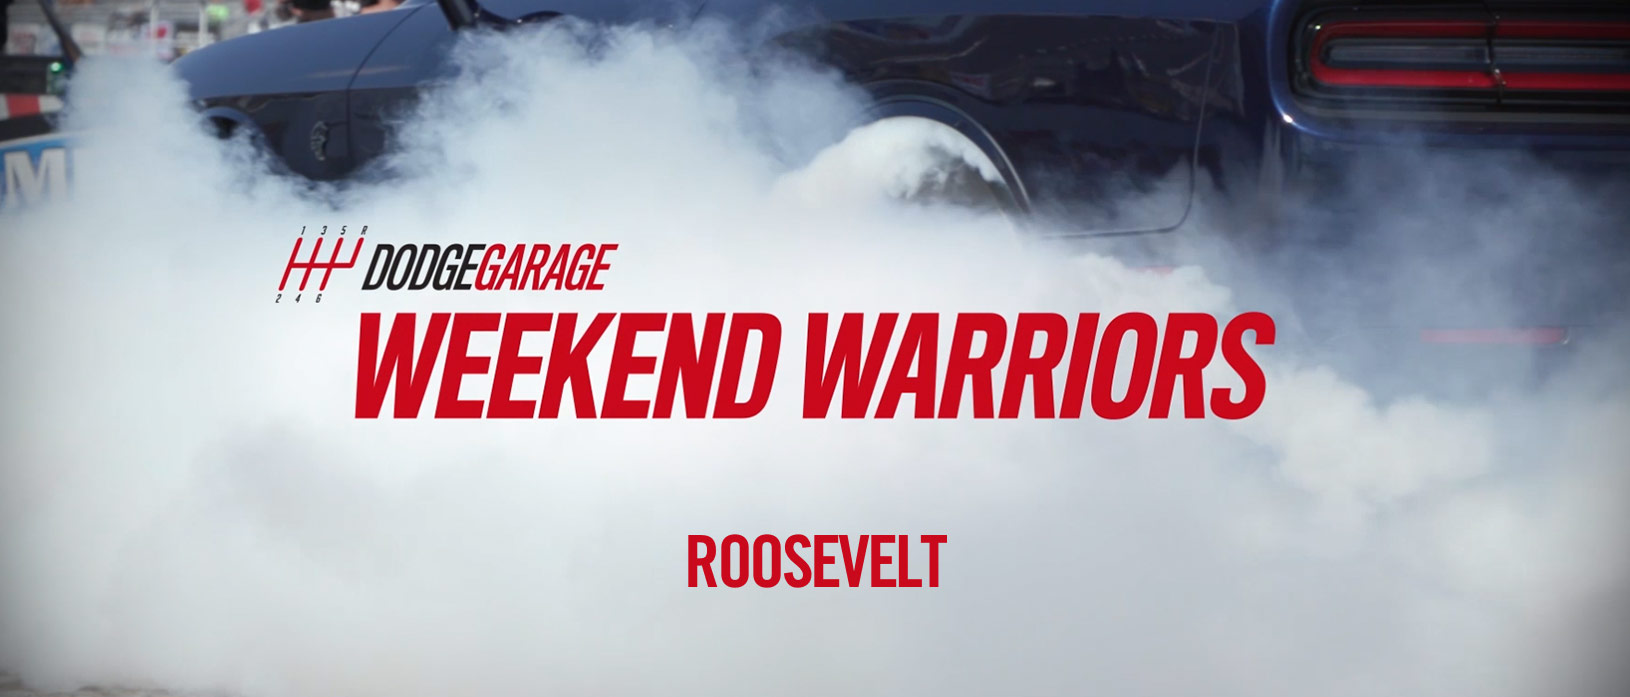 Weekend Warriors – Roosevelt